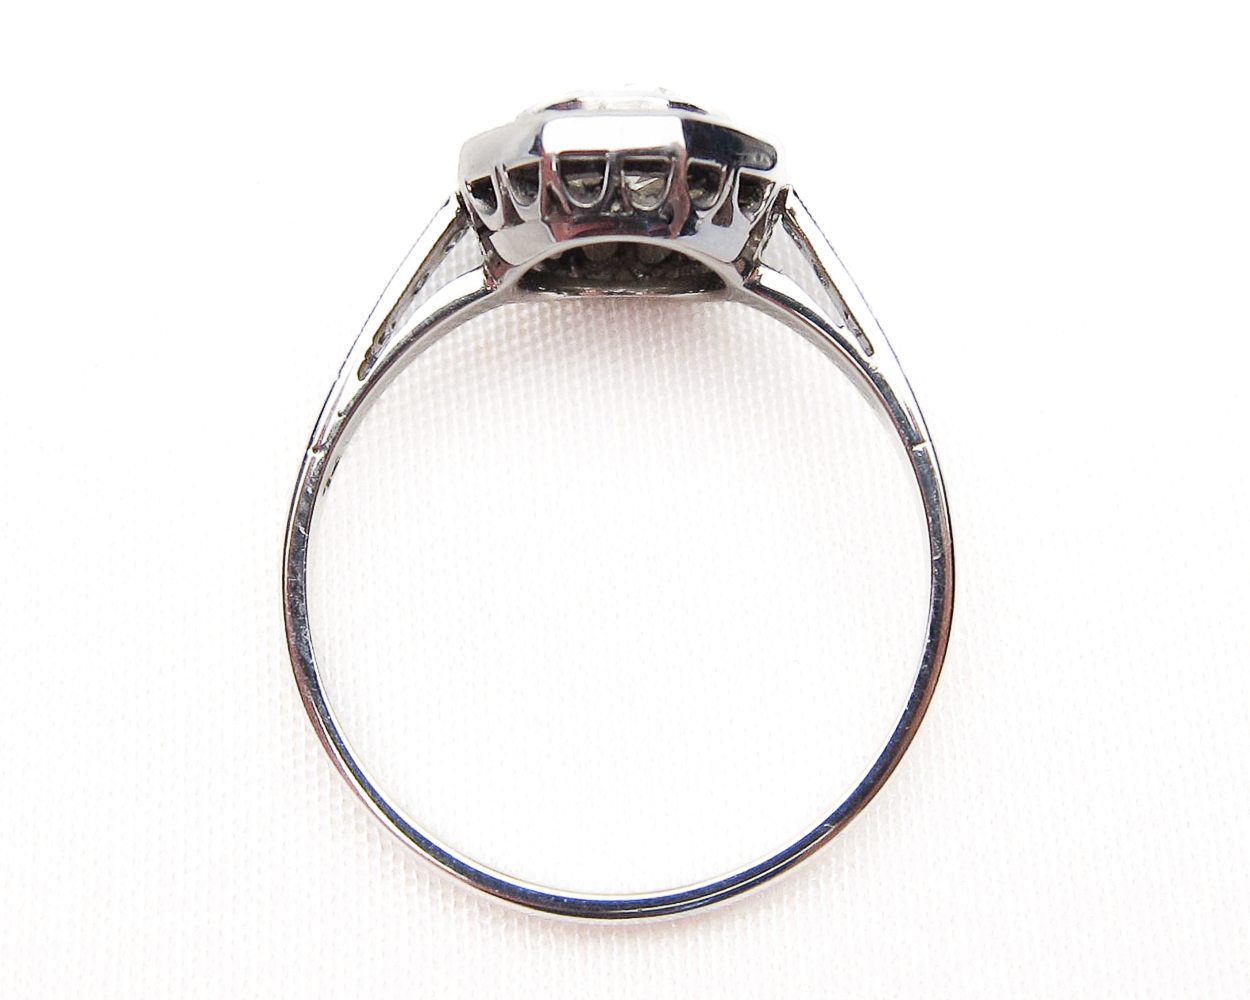 Art Deco Hexagonal Onyx Diamond Ring